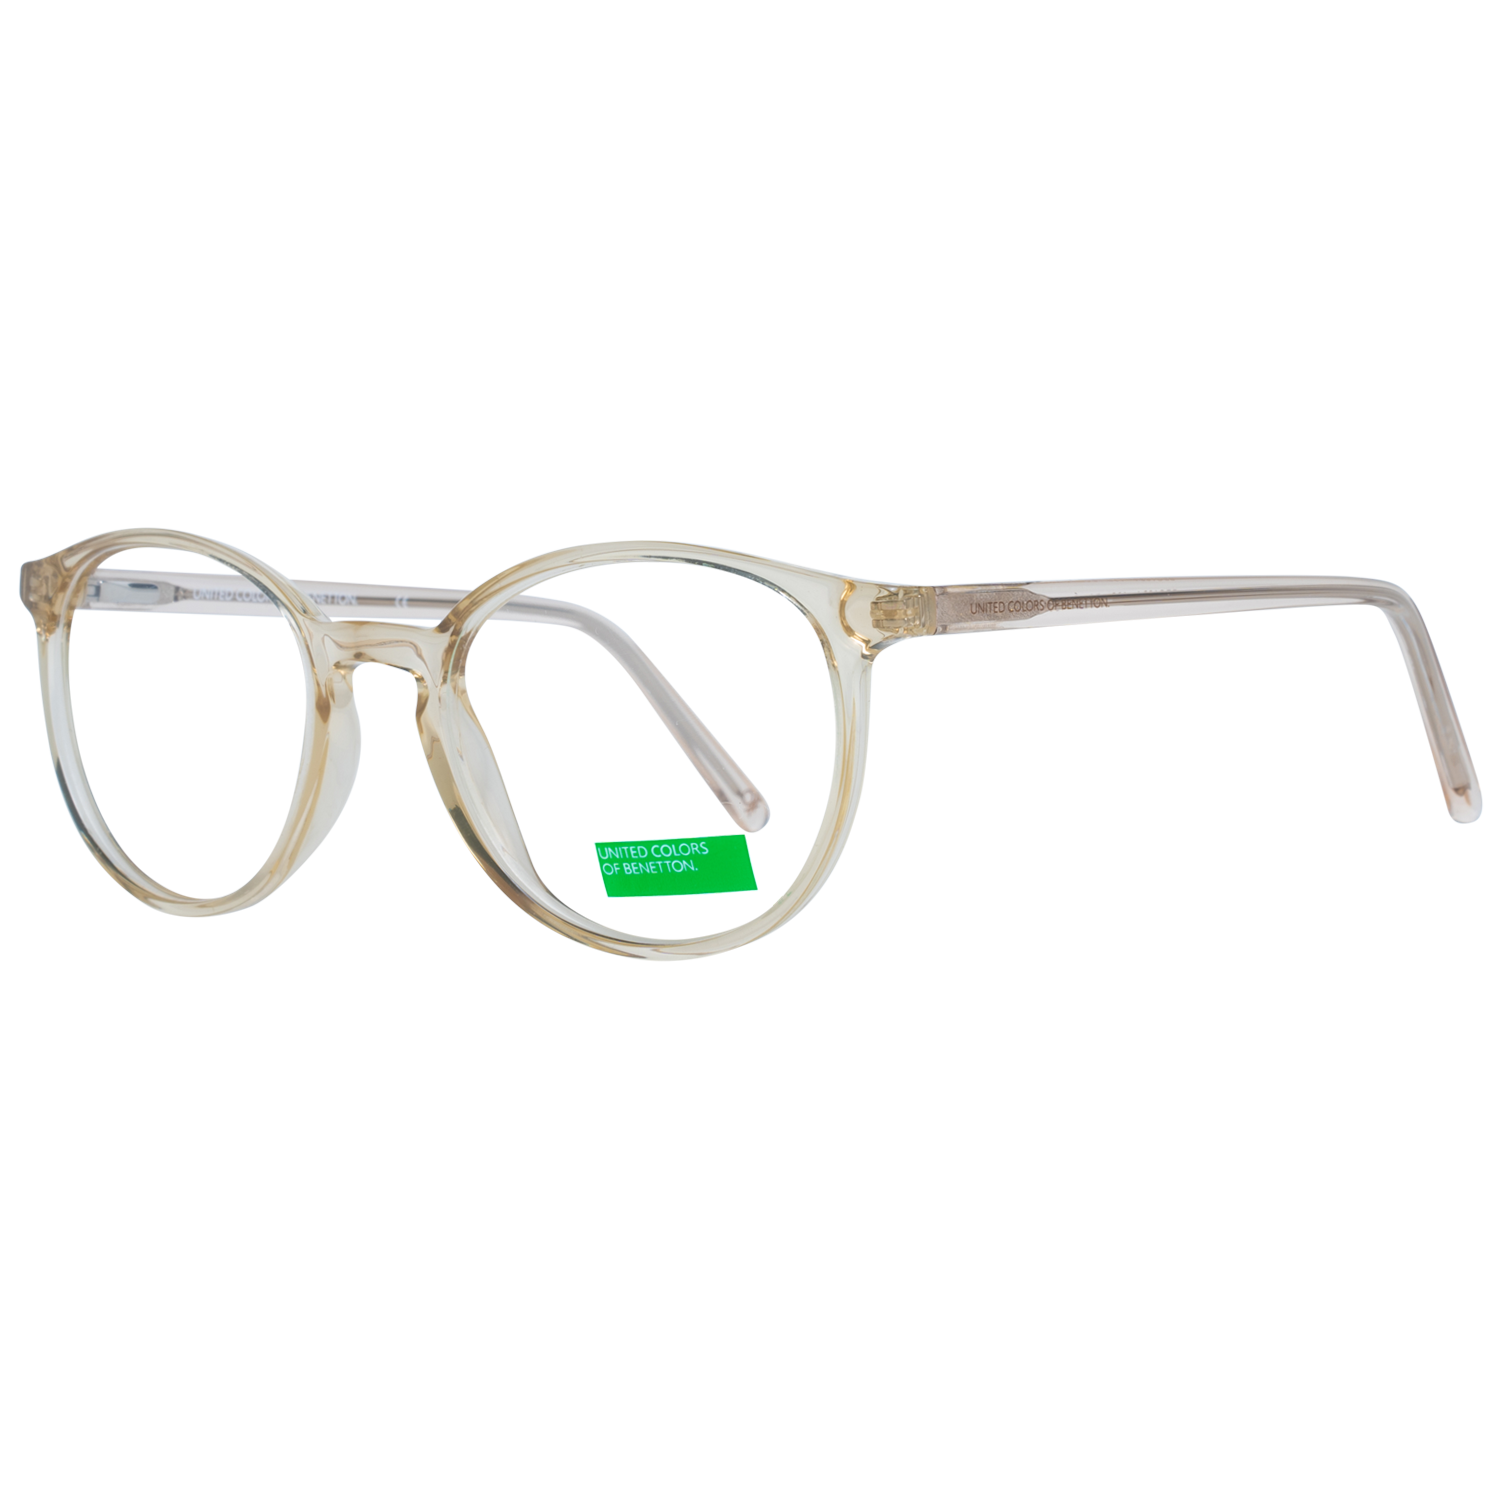 Benetton Frames Benetton Optical Frame BEO1036 132 50 Eyeglasses Eyewear UK USA Australia 